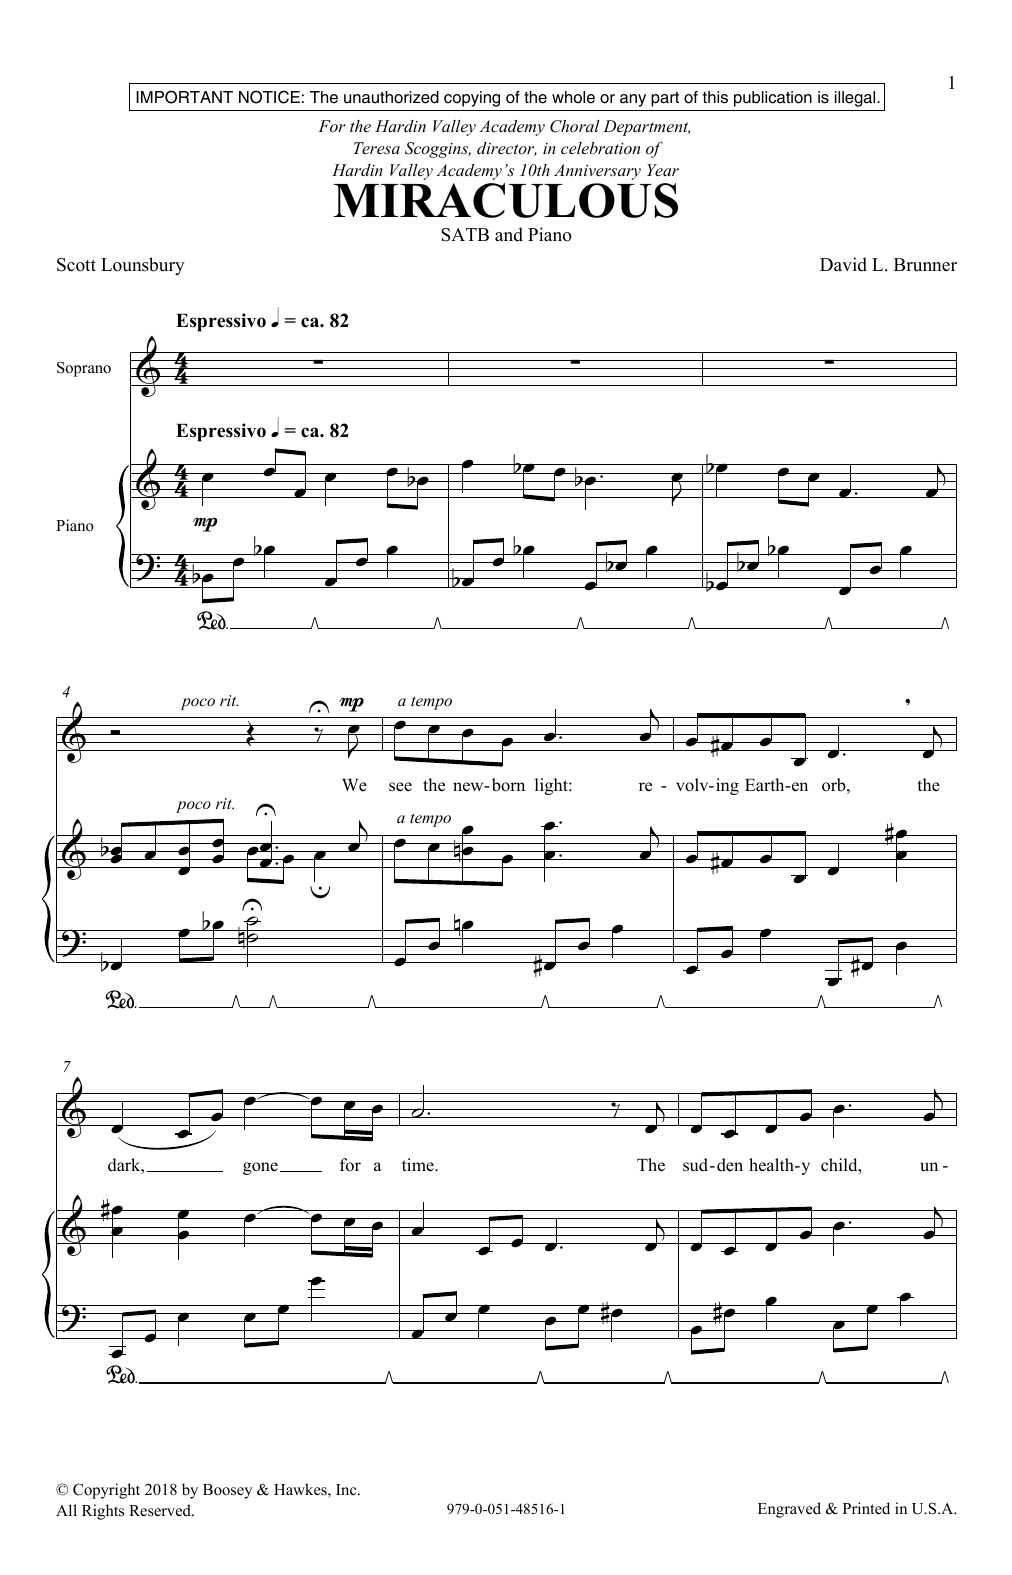 David Brunner & Scott Lounsbury Miraculous Sheet Music Notes & Chords for SATB Choir - Download or Print PDF